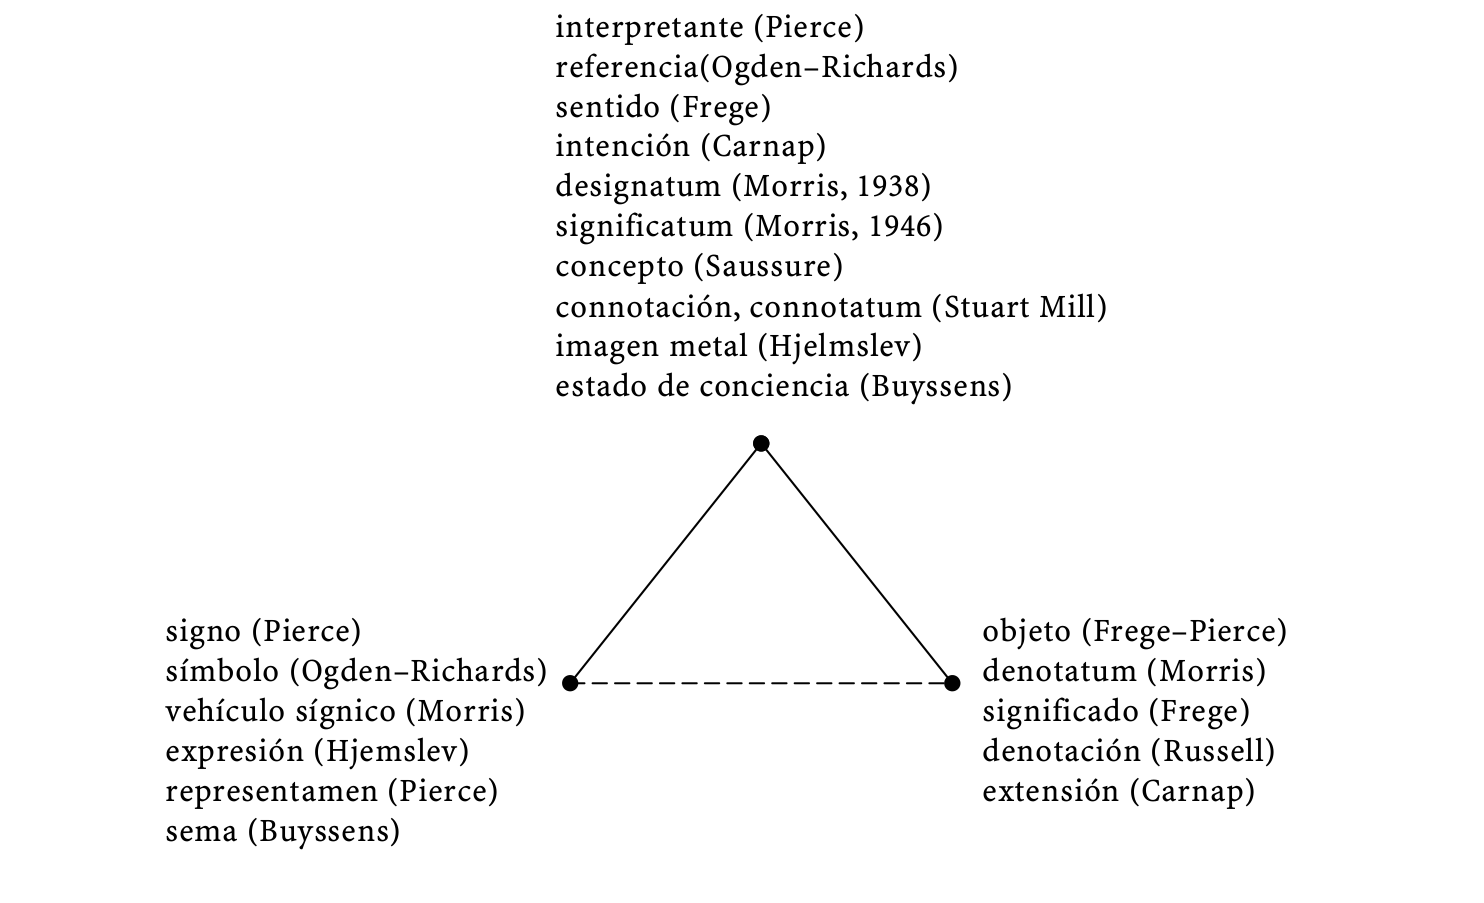 Triángulo que contempla los términos utilizados por Pierce, Ogden-Richards, Frege, Carnap, Morris, Saussure, Sturart Mill, Hjekmslev, Buyssens.